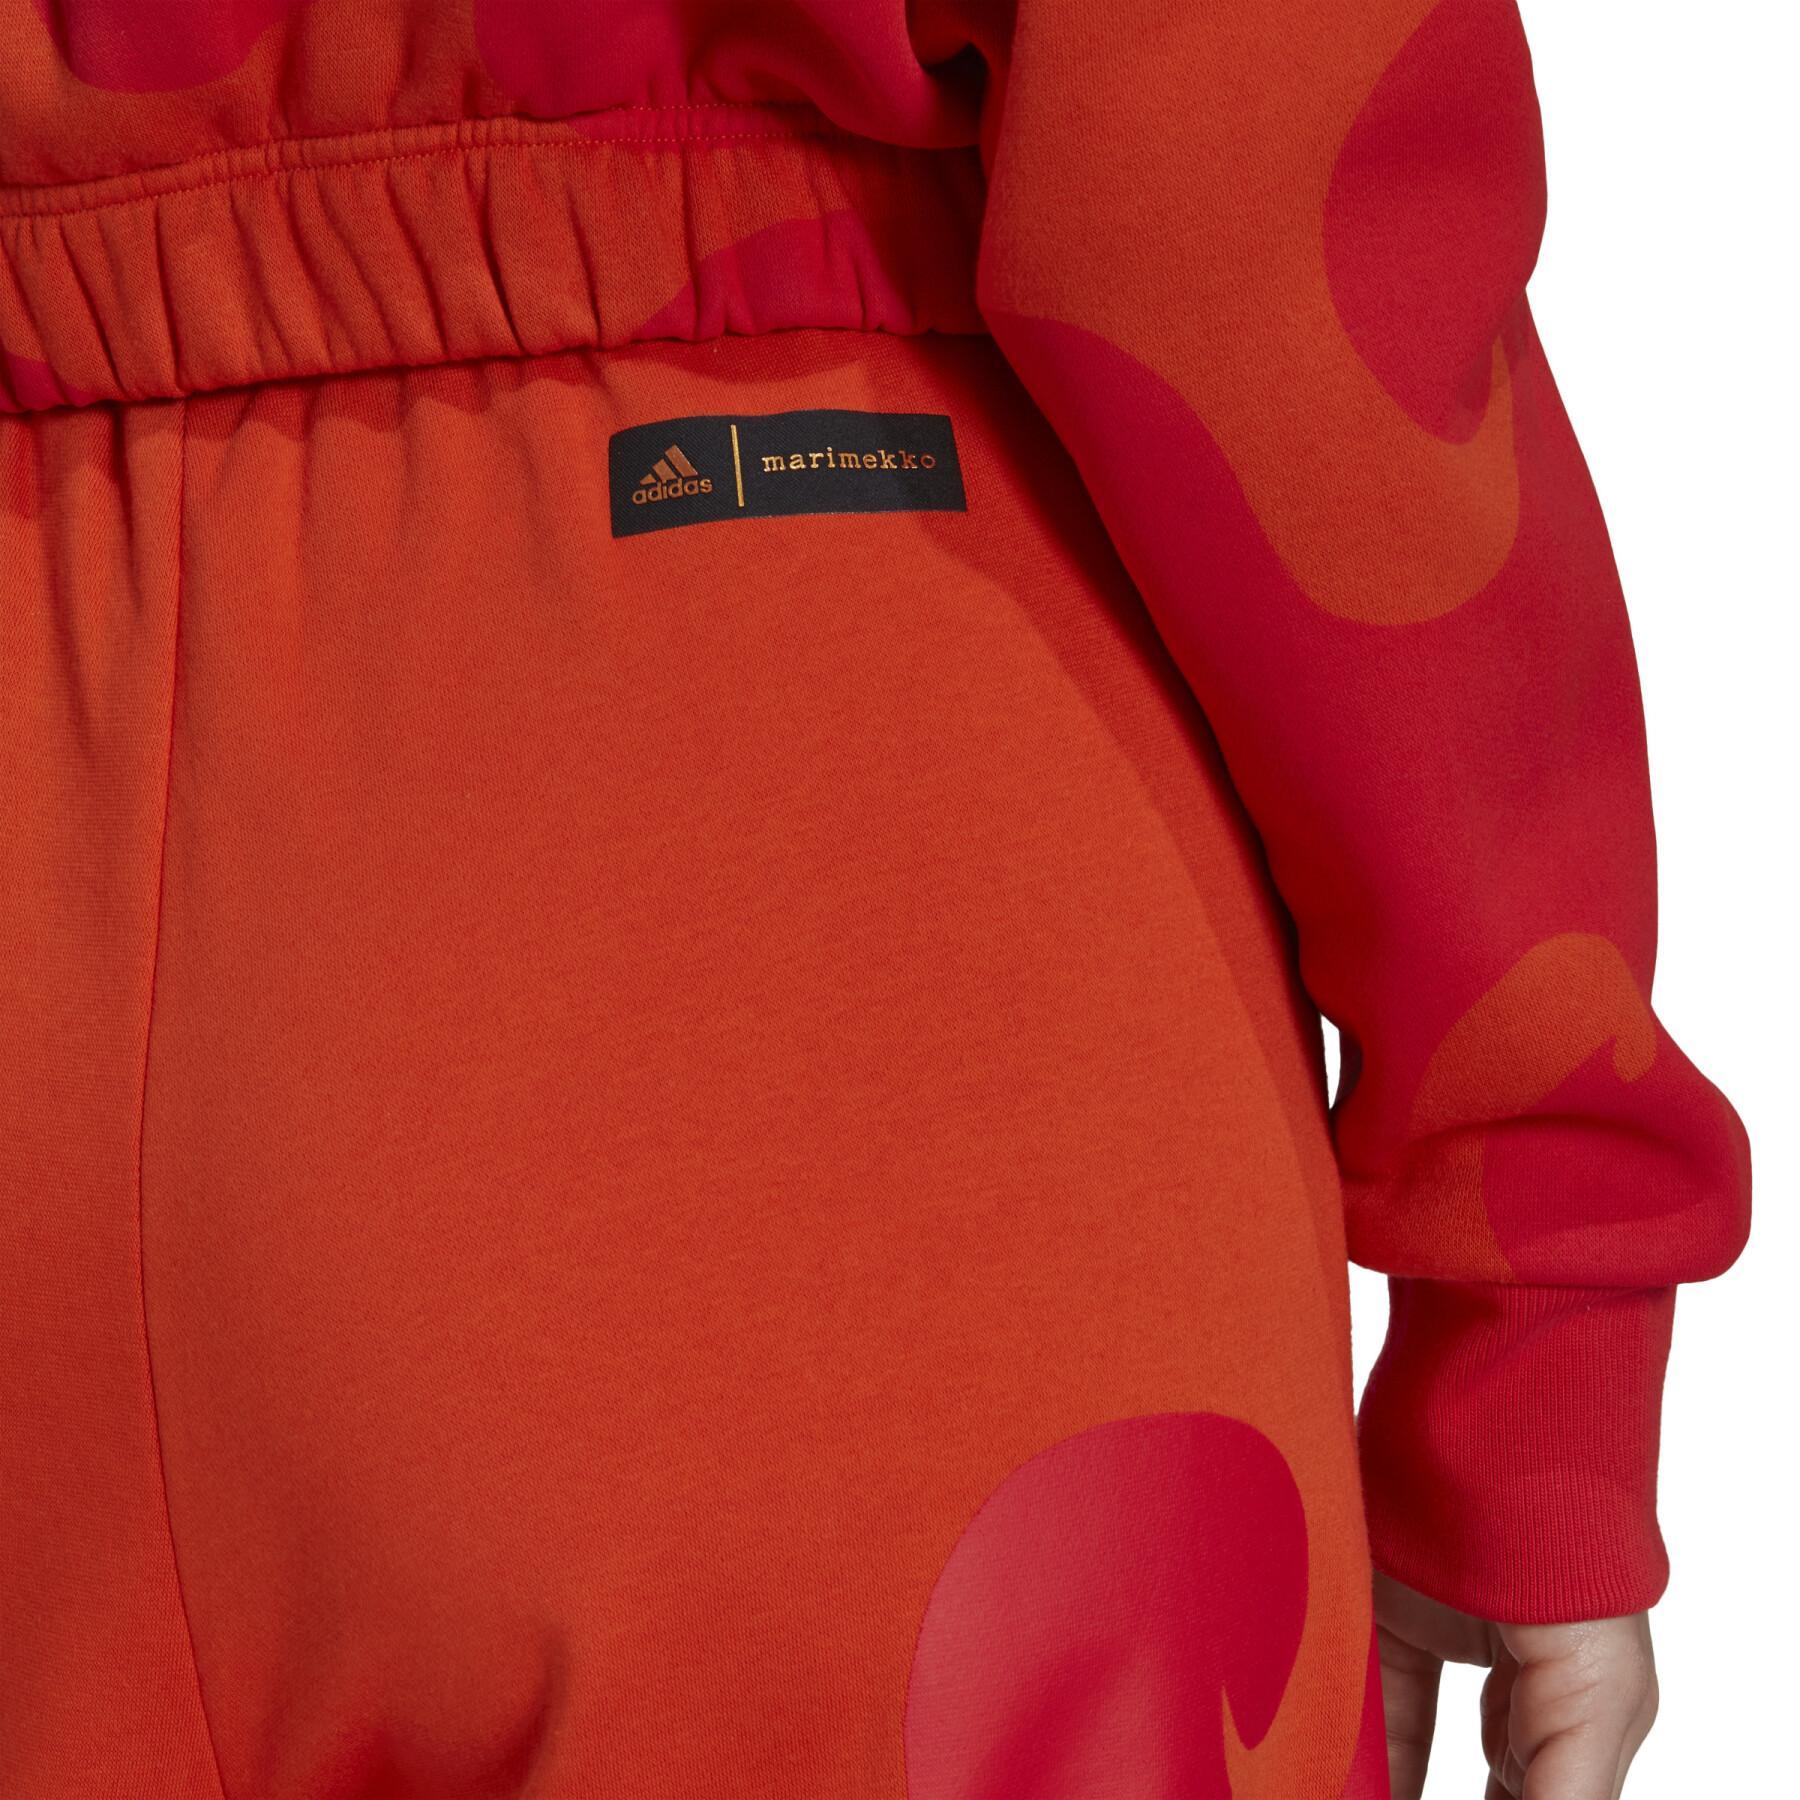 Damskie szerokie legginsy adidas Marimekko